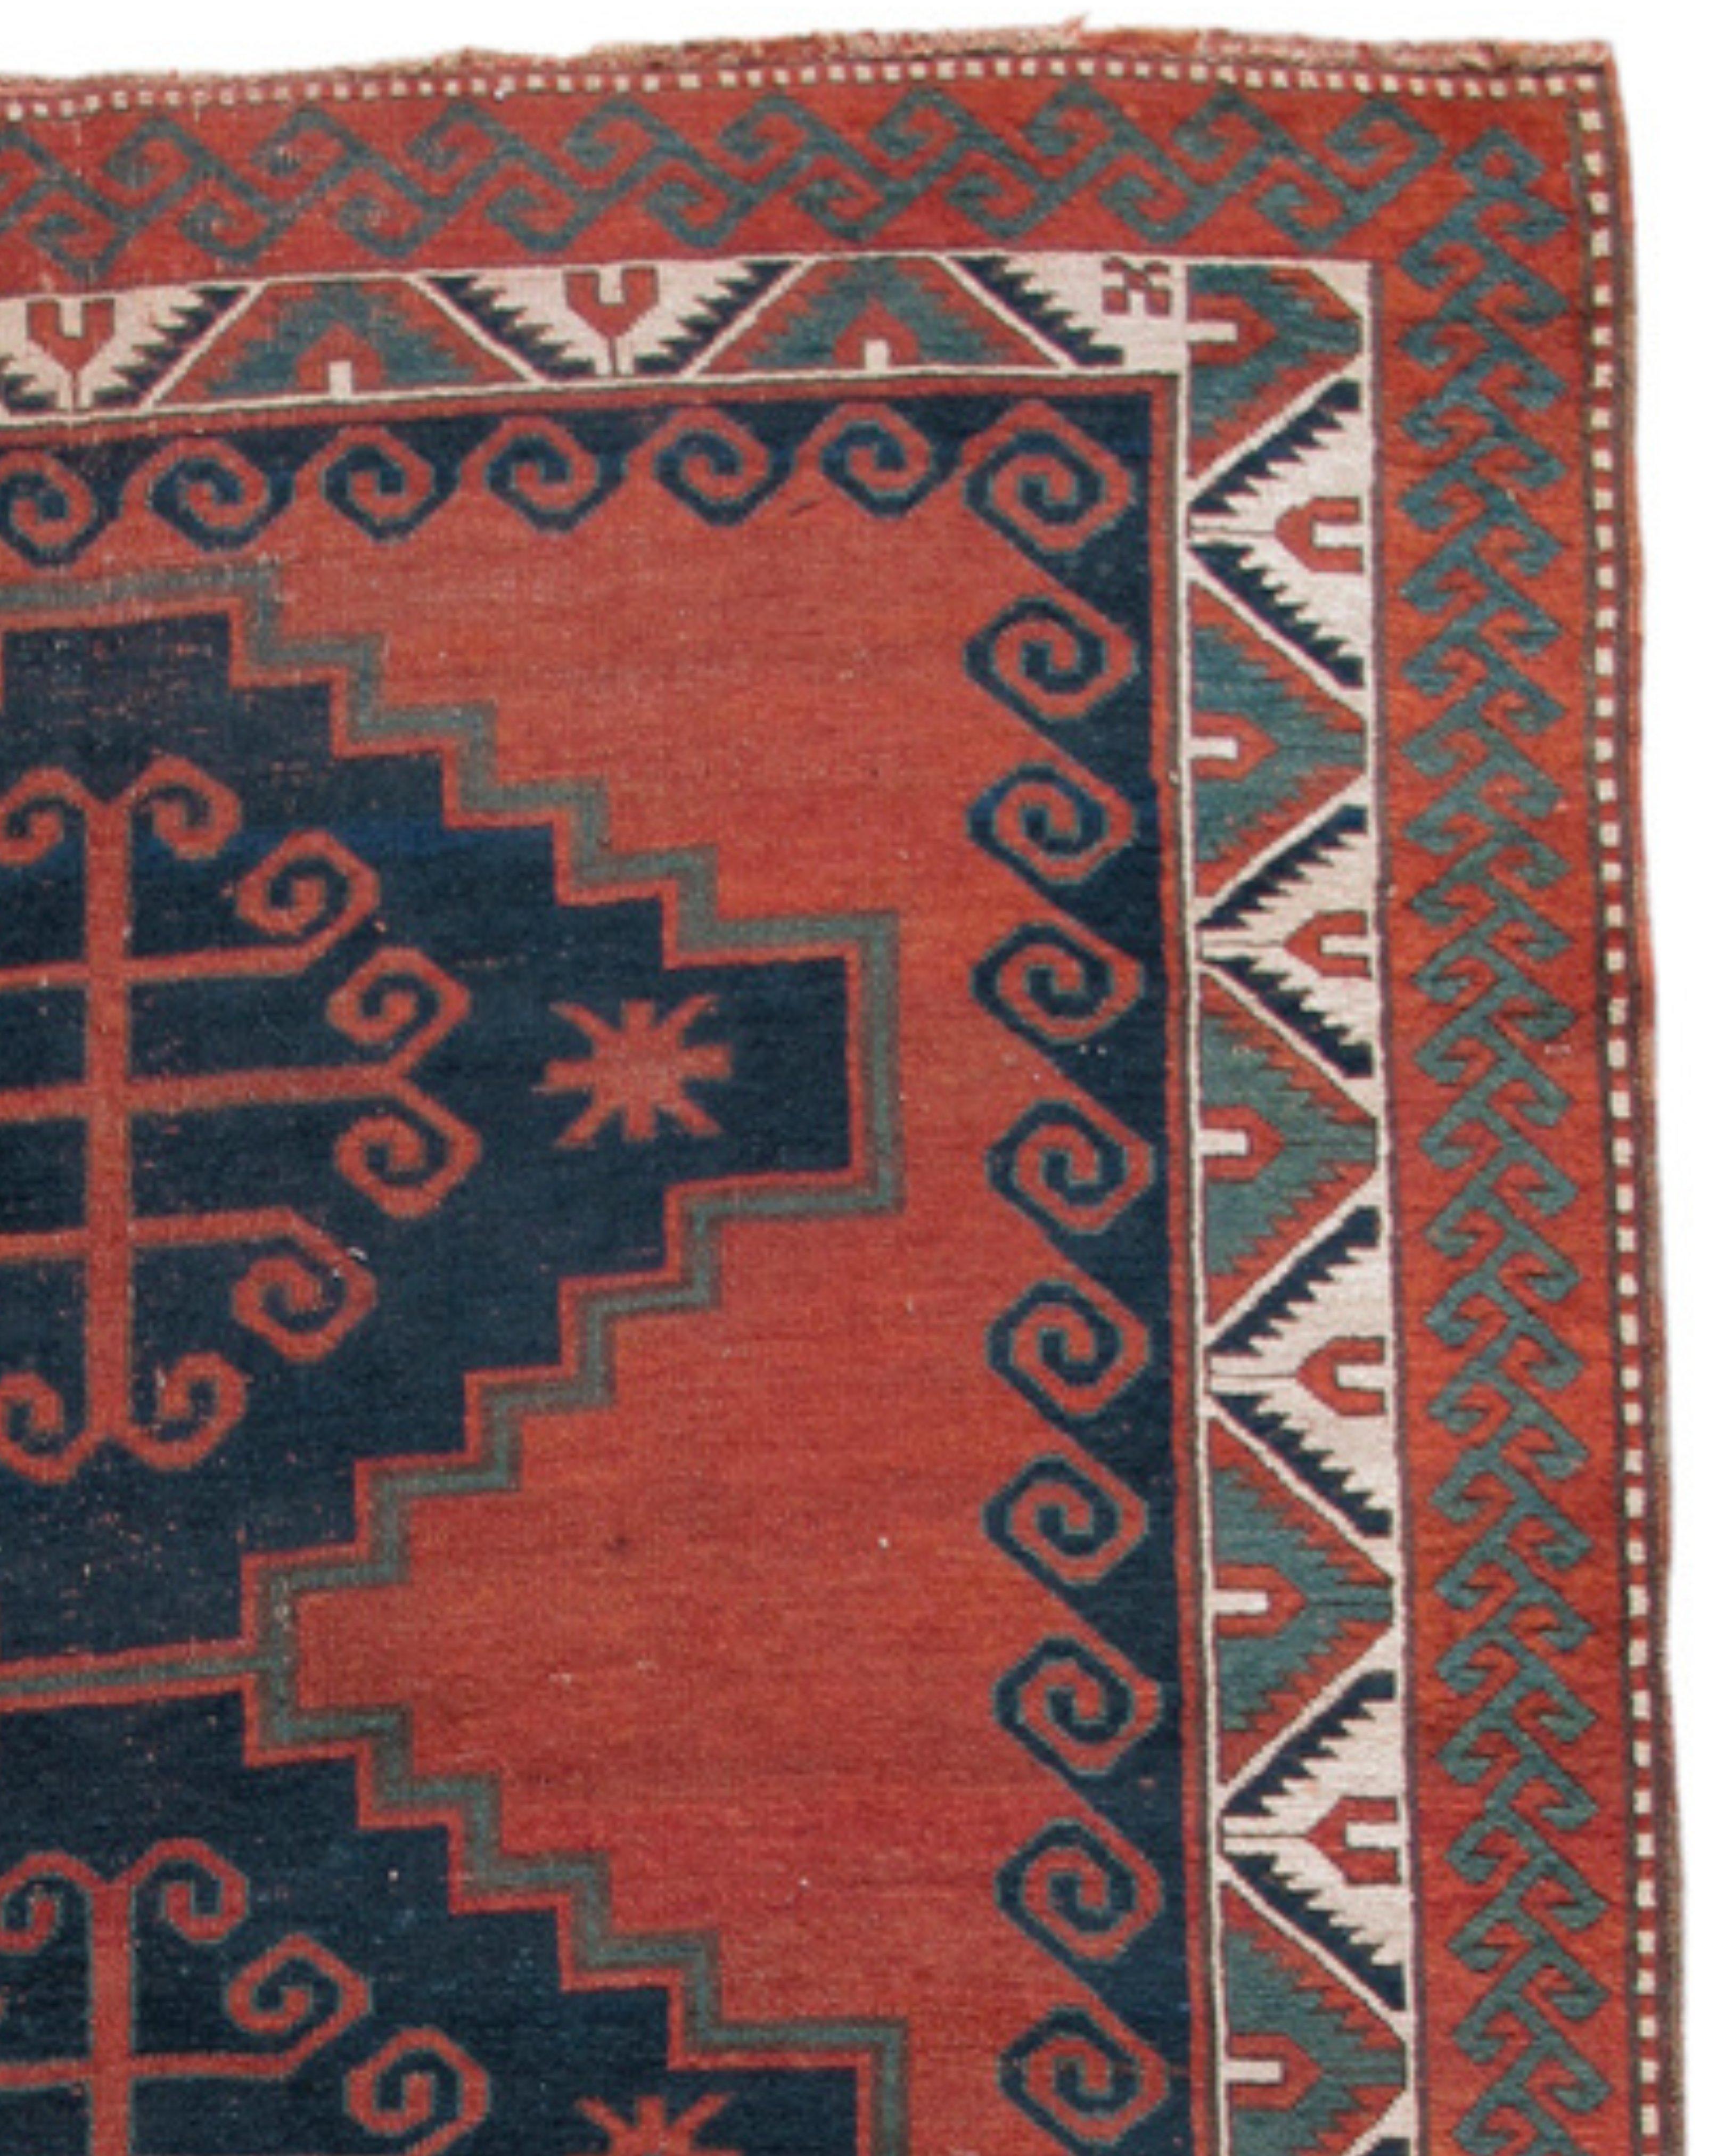 Antique Kazak Rug, c. 1900

Additional Information:
Dimensions: 5'6